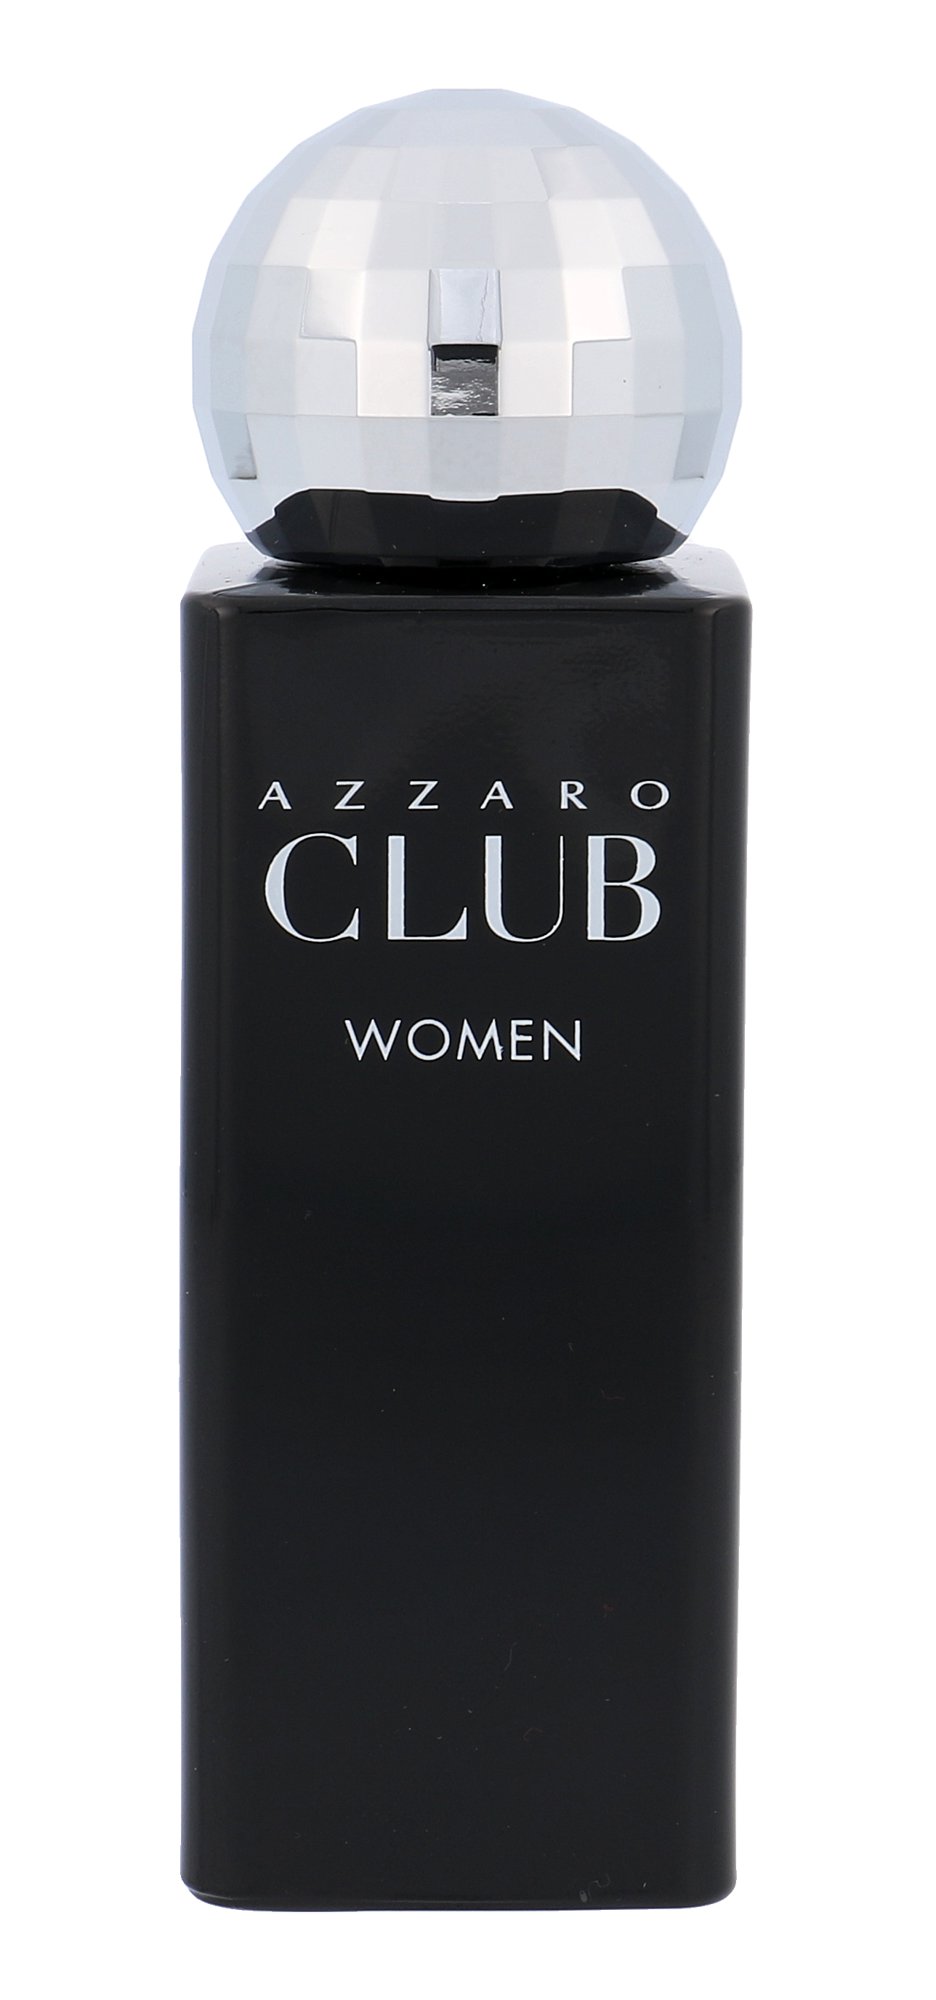 Azzaro Club Women, Toaletní voda 75ml - tester